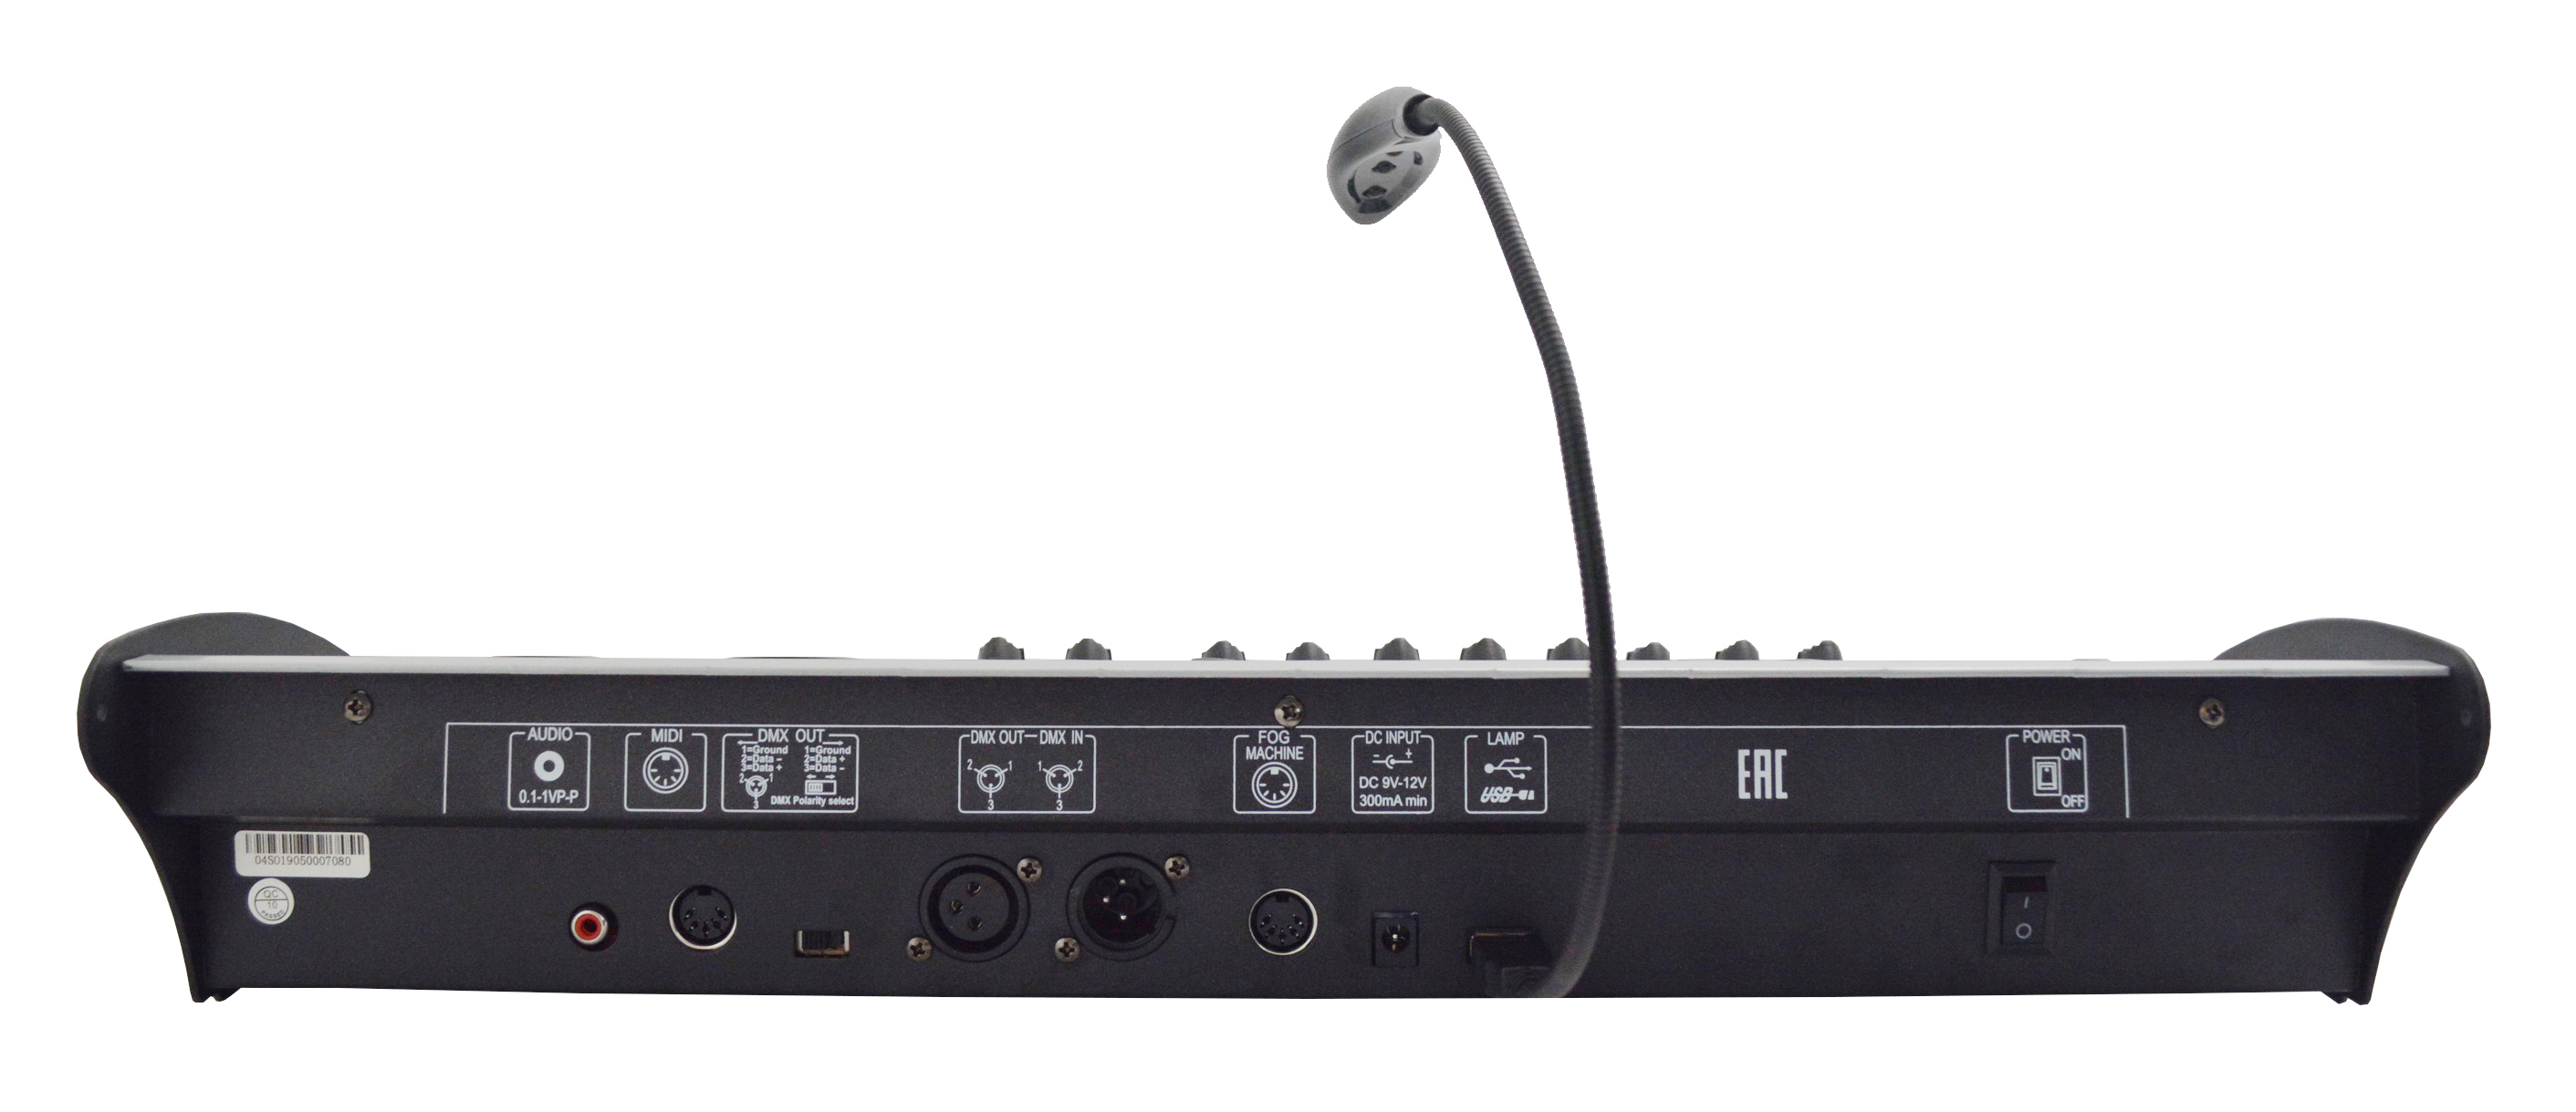 XLine Light LC DMX-240A Контроллер DMX, 192 канала купить в prostore.me